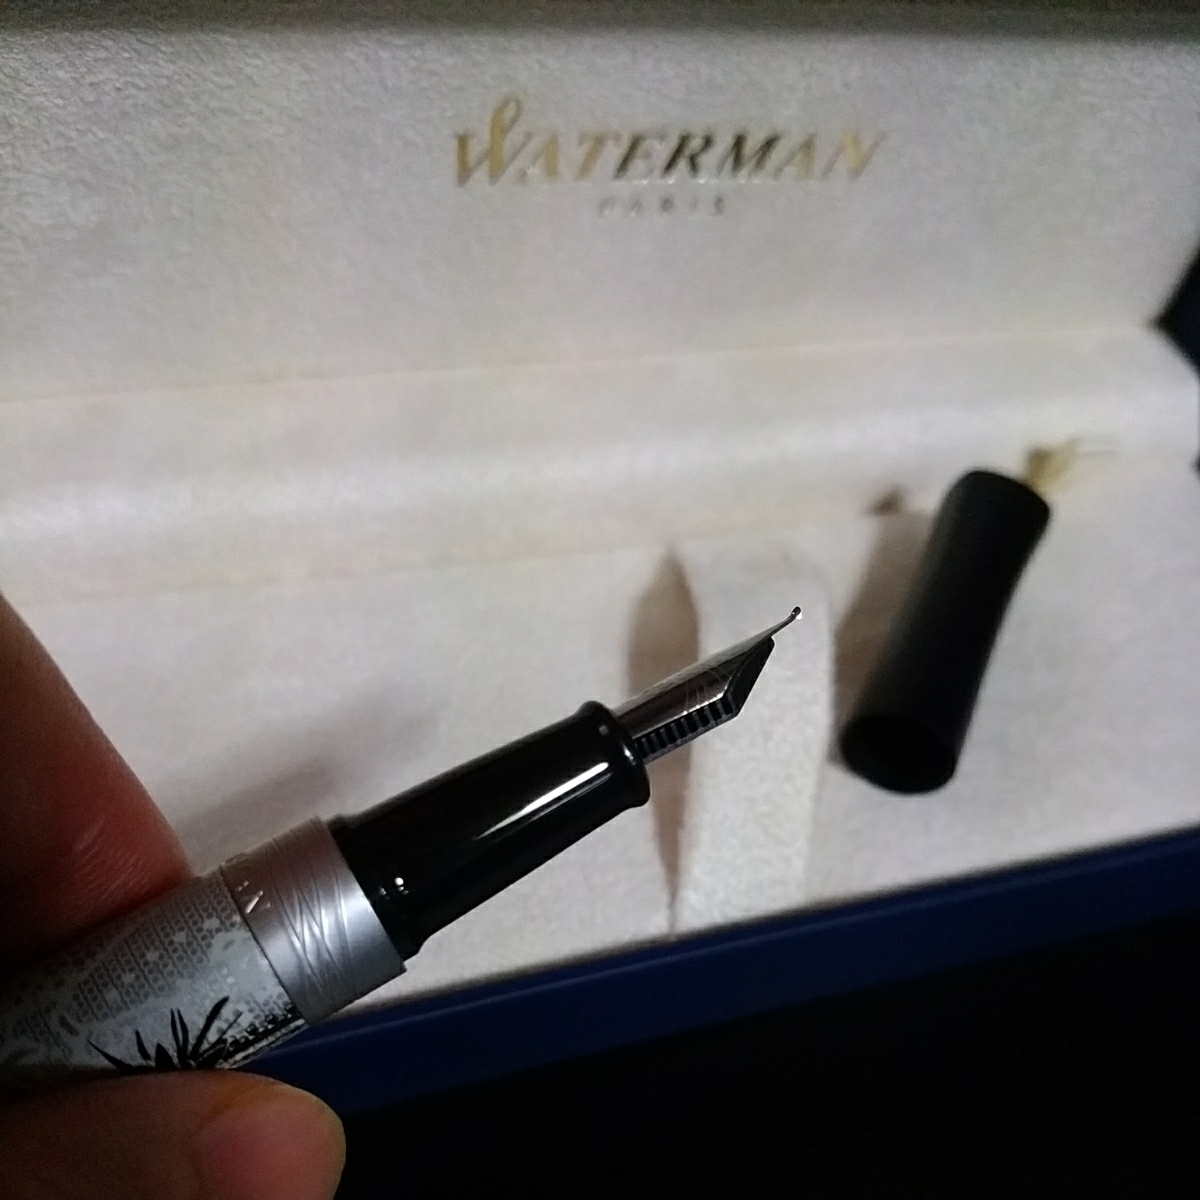  Waterman fountain pen order s